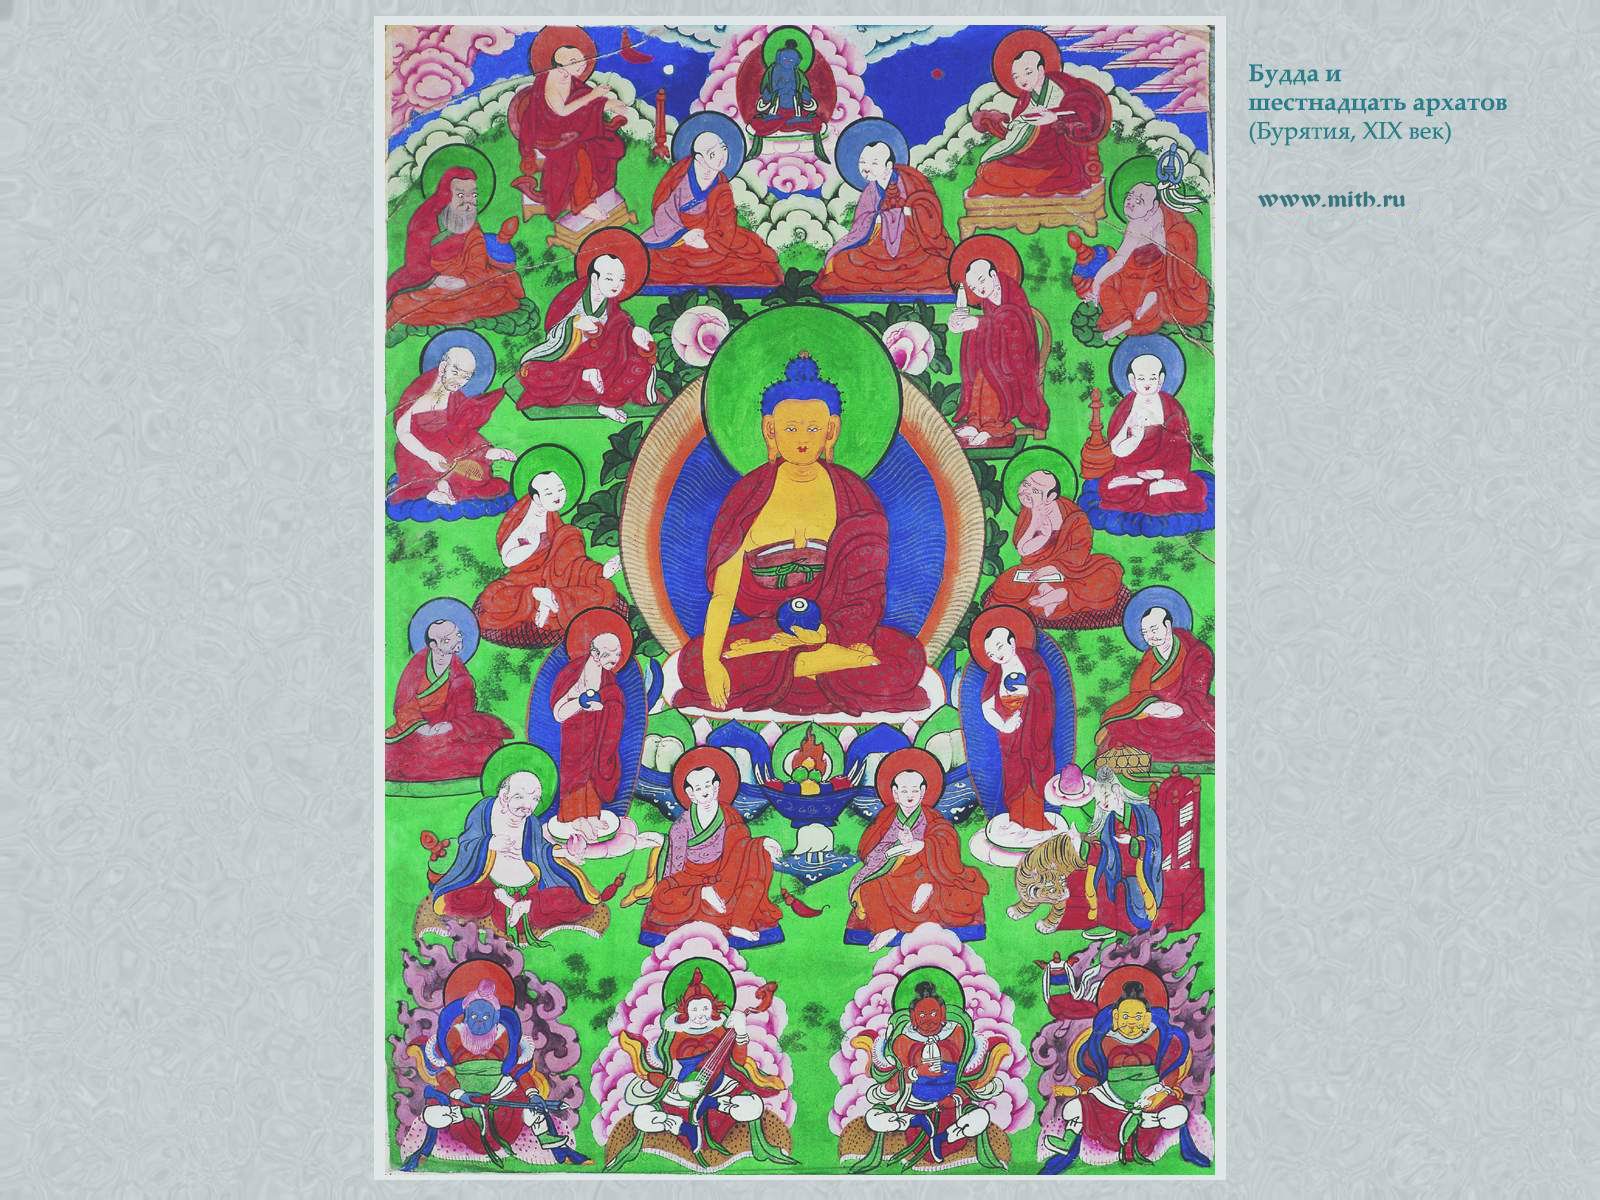 Будда Шакьямуни, 16 архатов,
локапалы Вайшравана и др.

перейти к книге 'Тибетская живопись'